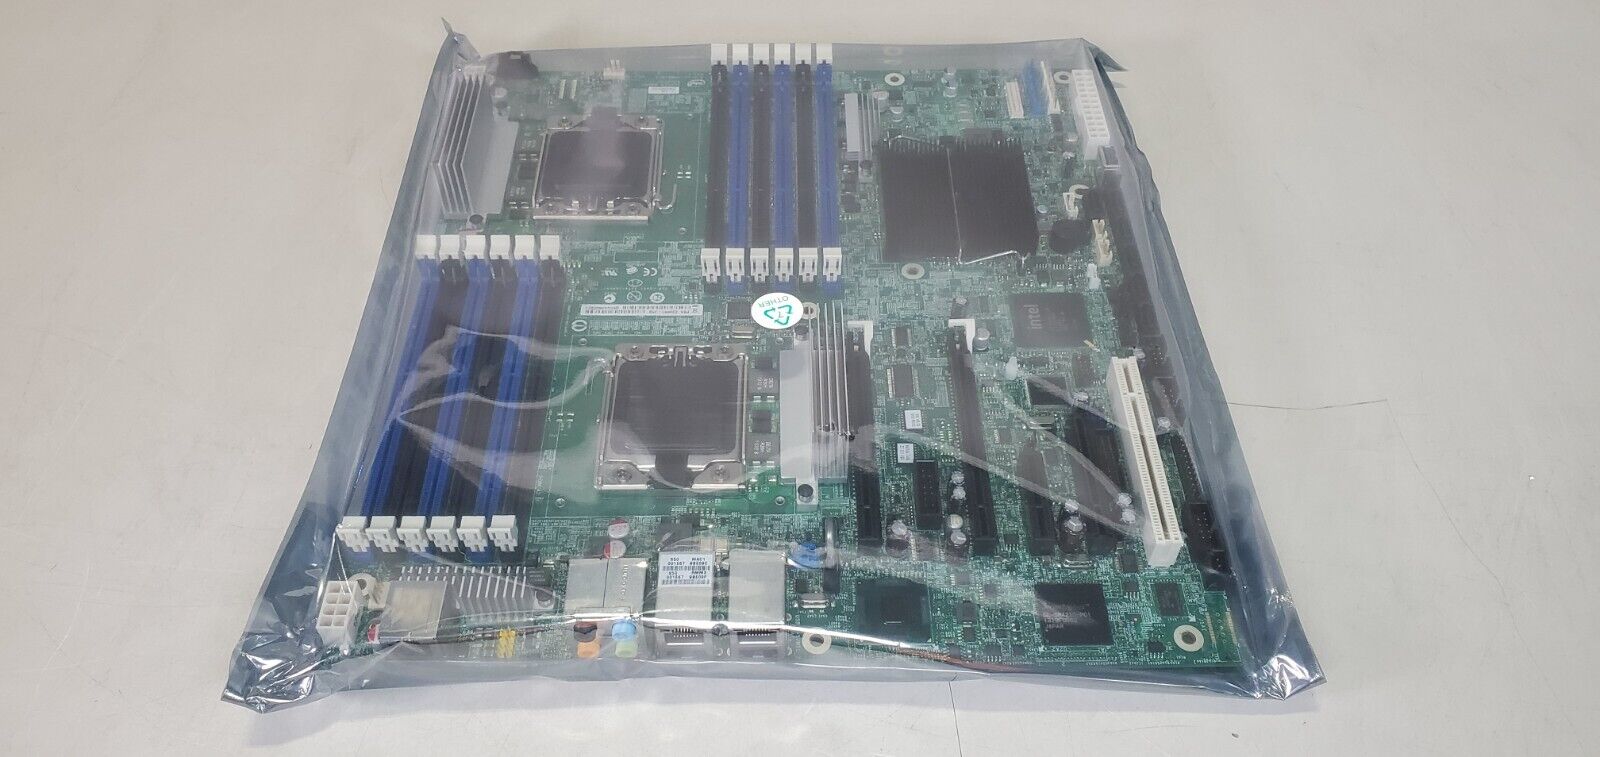 *New* Intel Server board S5520SC Motherboard Dual Socket LGA1366 PC3